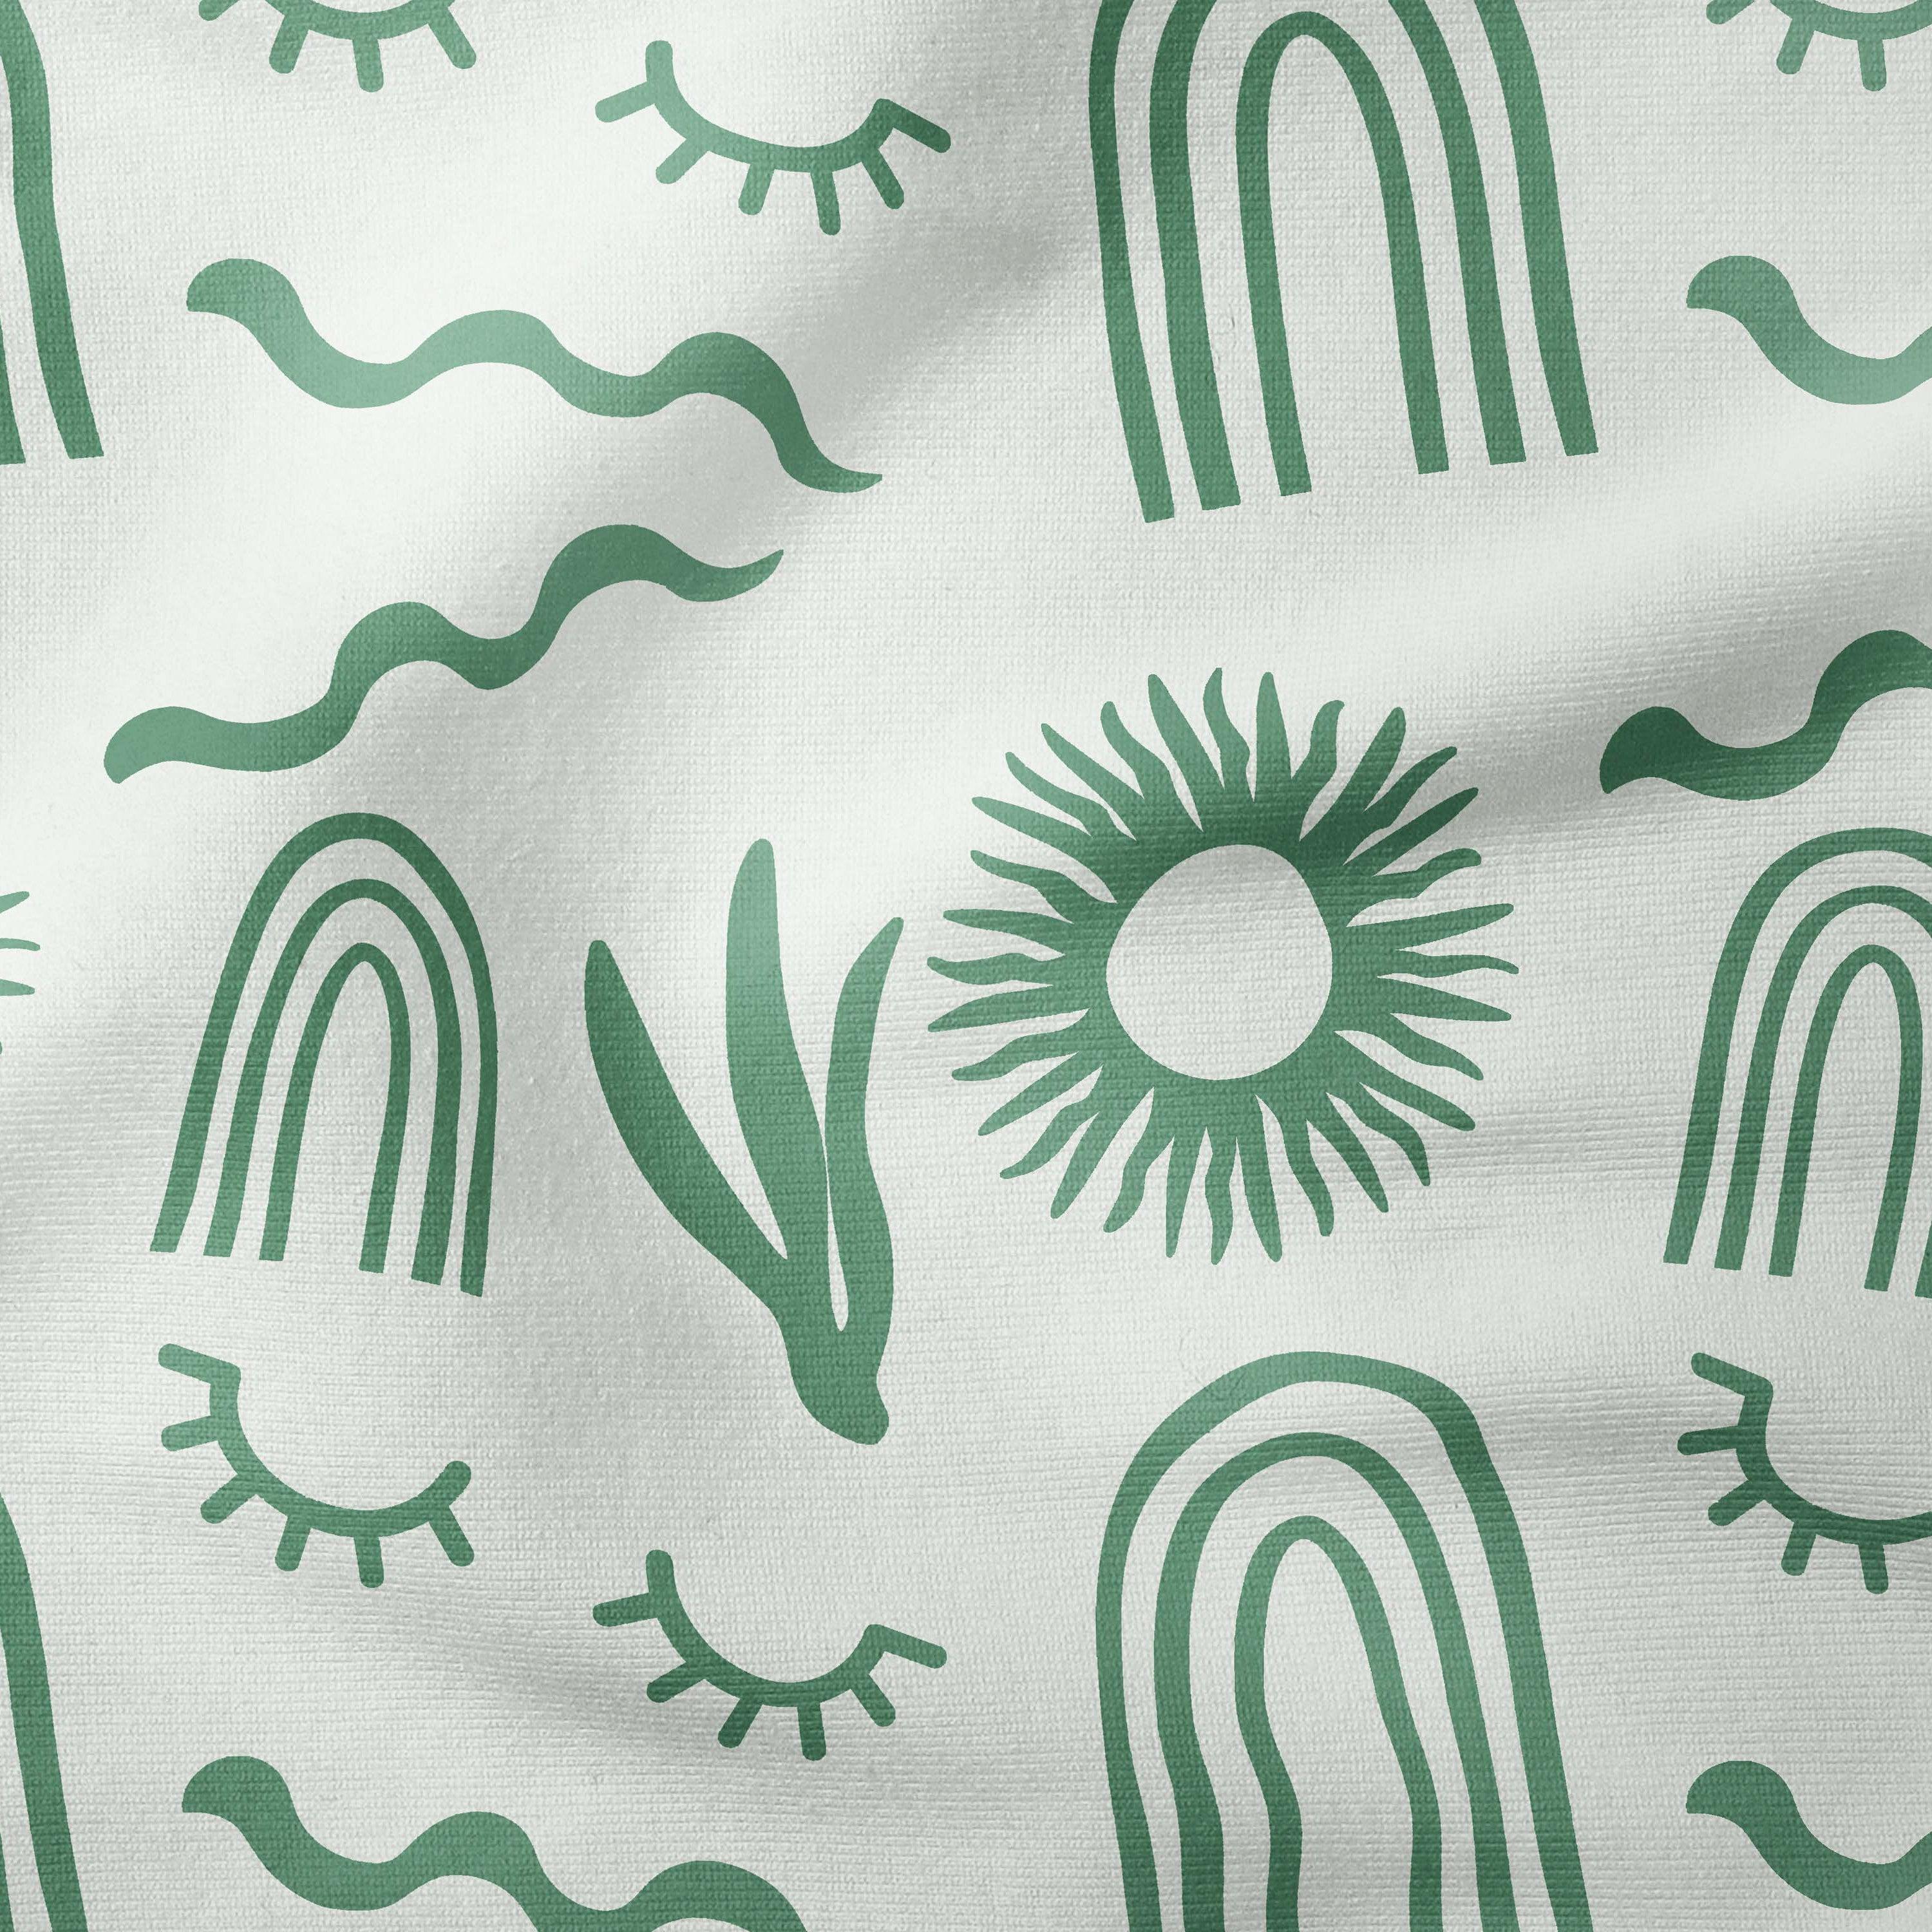 Abstract Shapes-Art Print Fabric-Melco Fabrics-Dark Green on Mint-Cotton Poplin (110gsm)-Online-Fabric-Shop-Australia